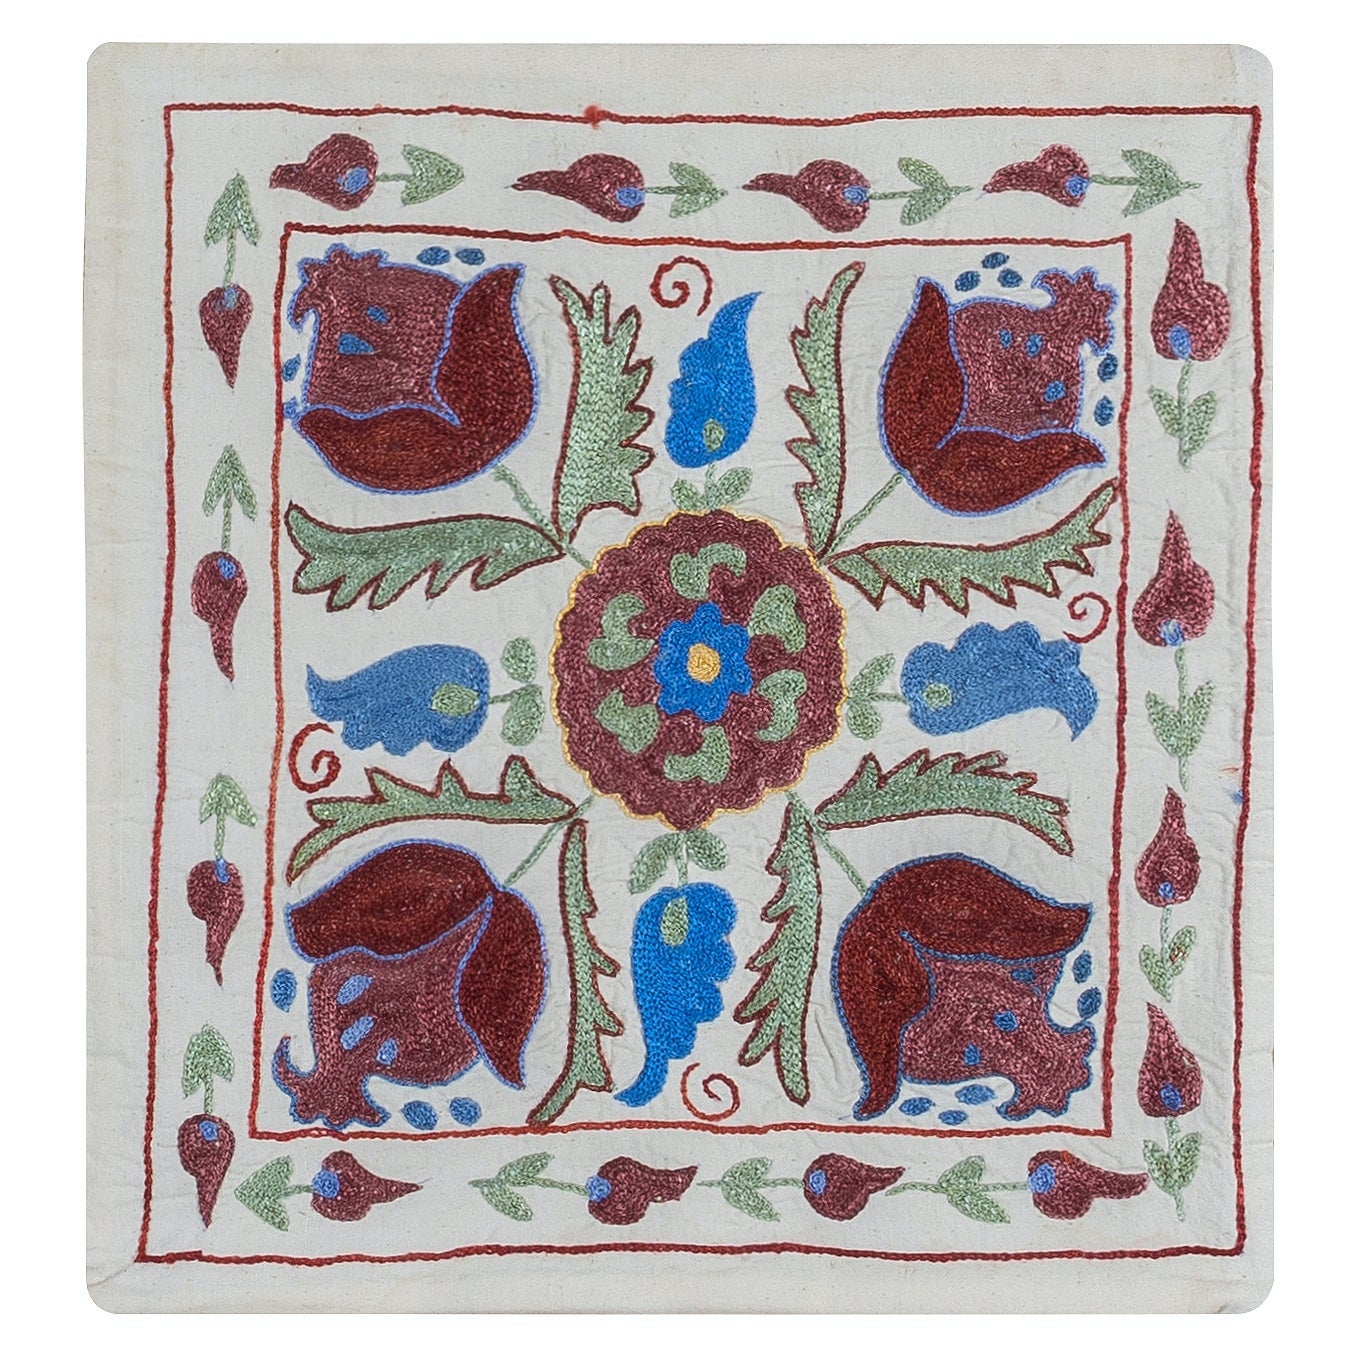 Embroidery Suzani Textile Lace Pillow Cover, Floral Uzbek Throw Pillow